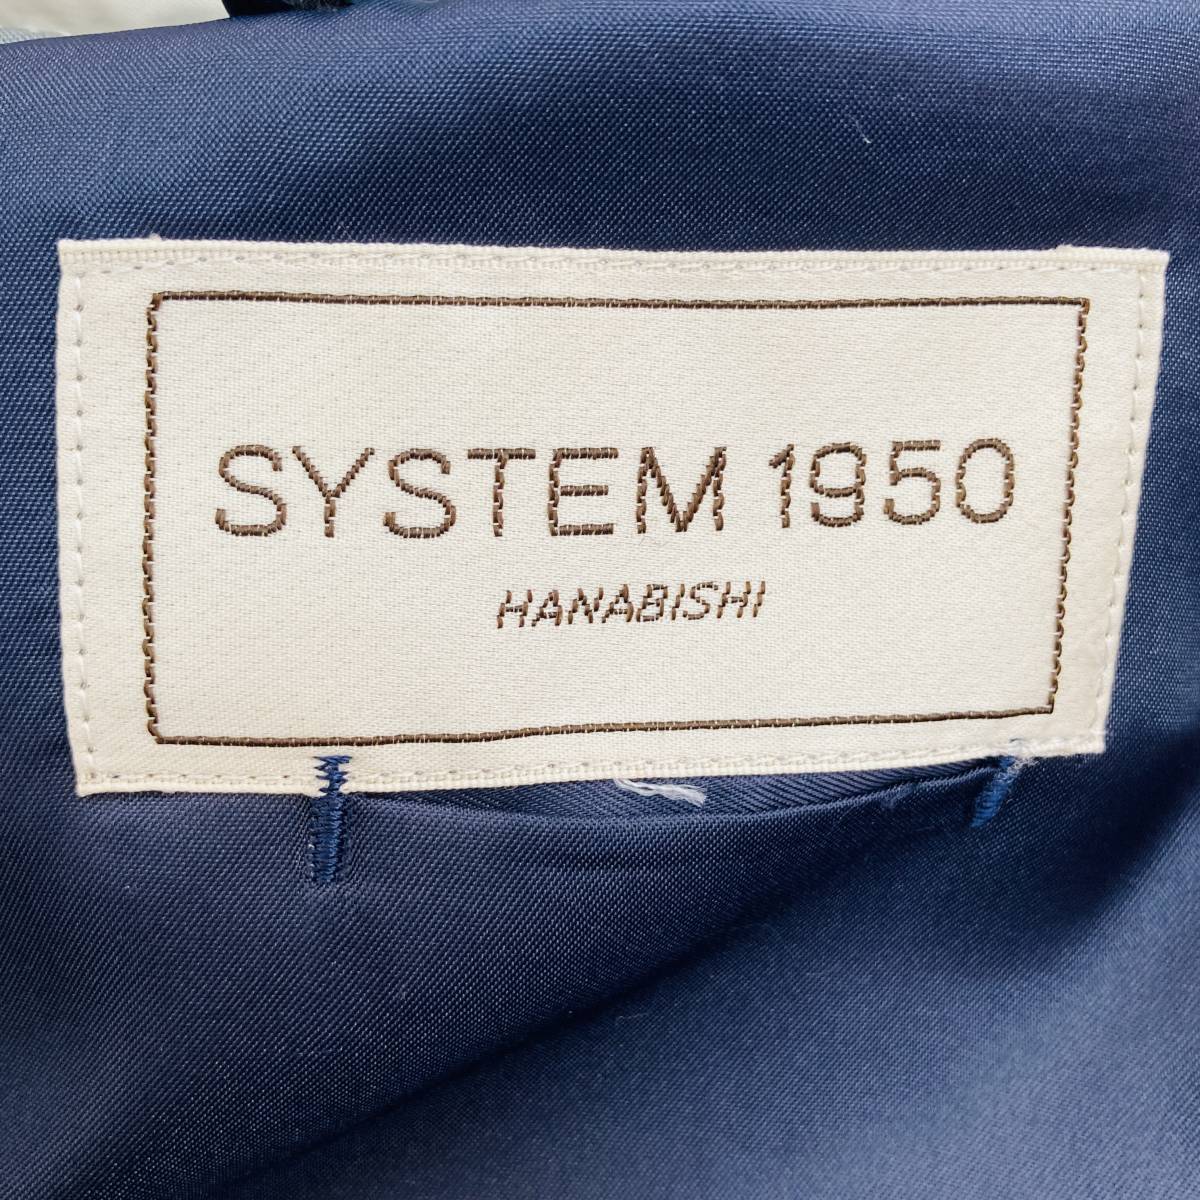 z358 HANABISHI SYSTEM 1950 フォーマル ストライプ 光沢 ダブル スーツ上下セットアップ メンズ ピークドラペル ネイビー 紺 ストライプ_画像7